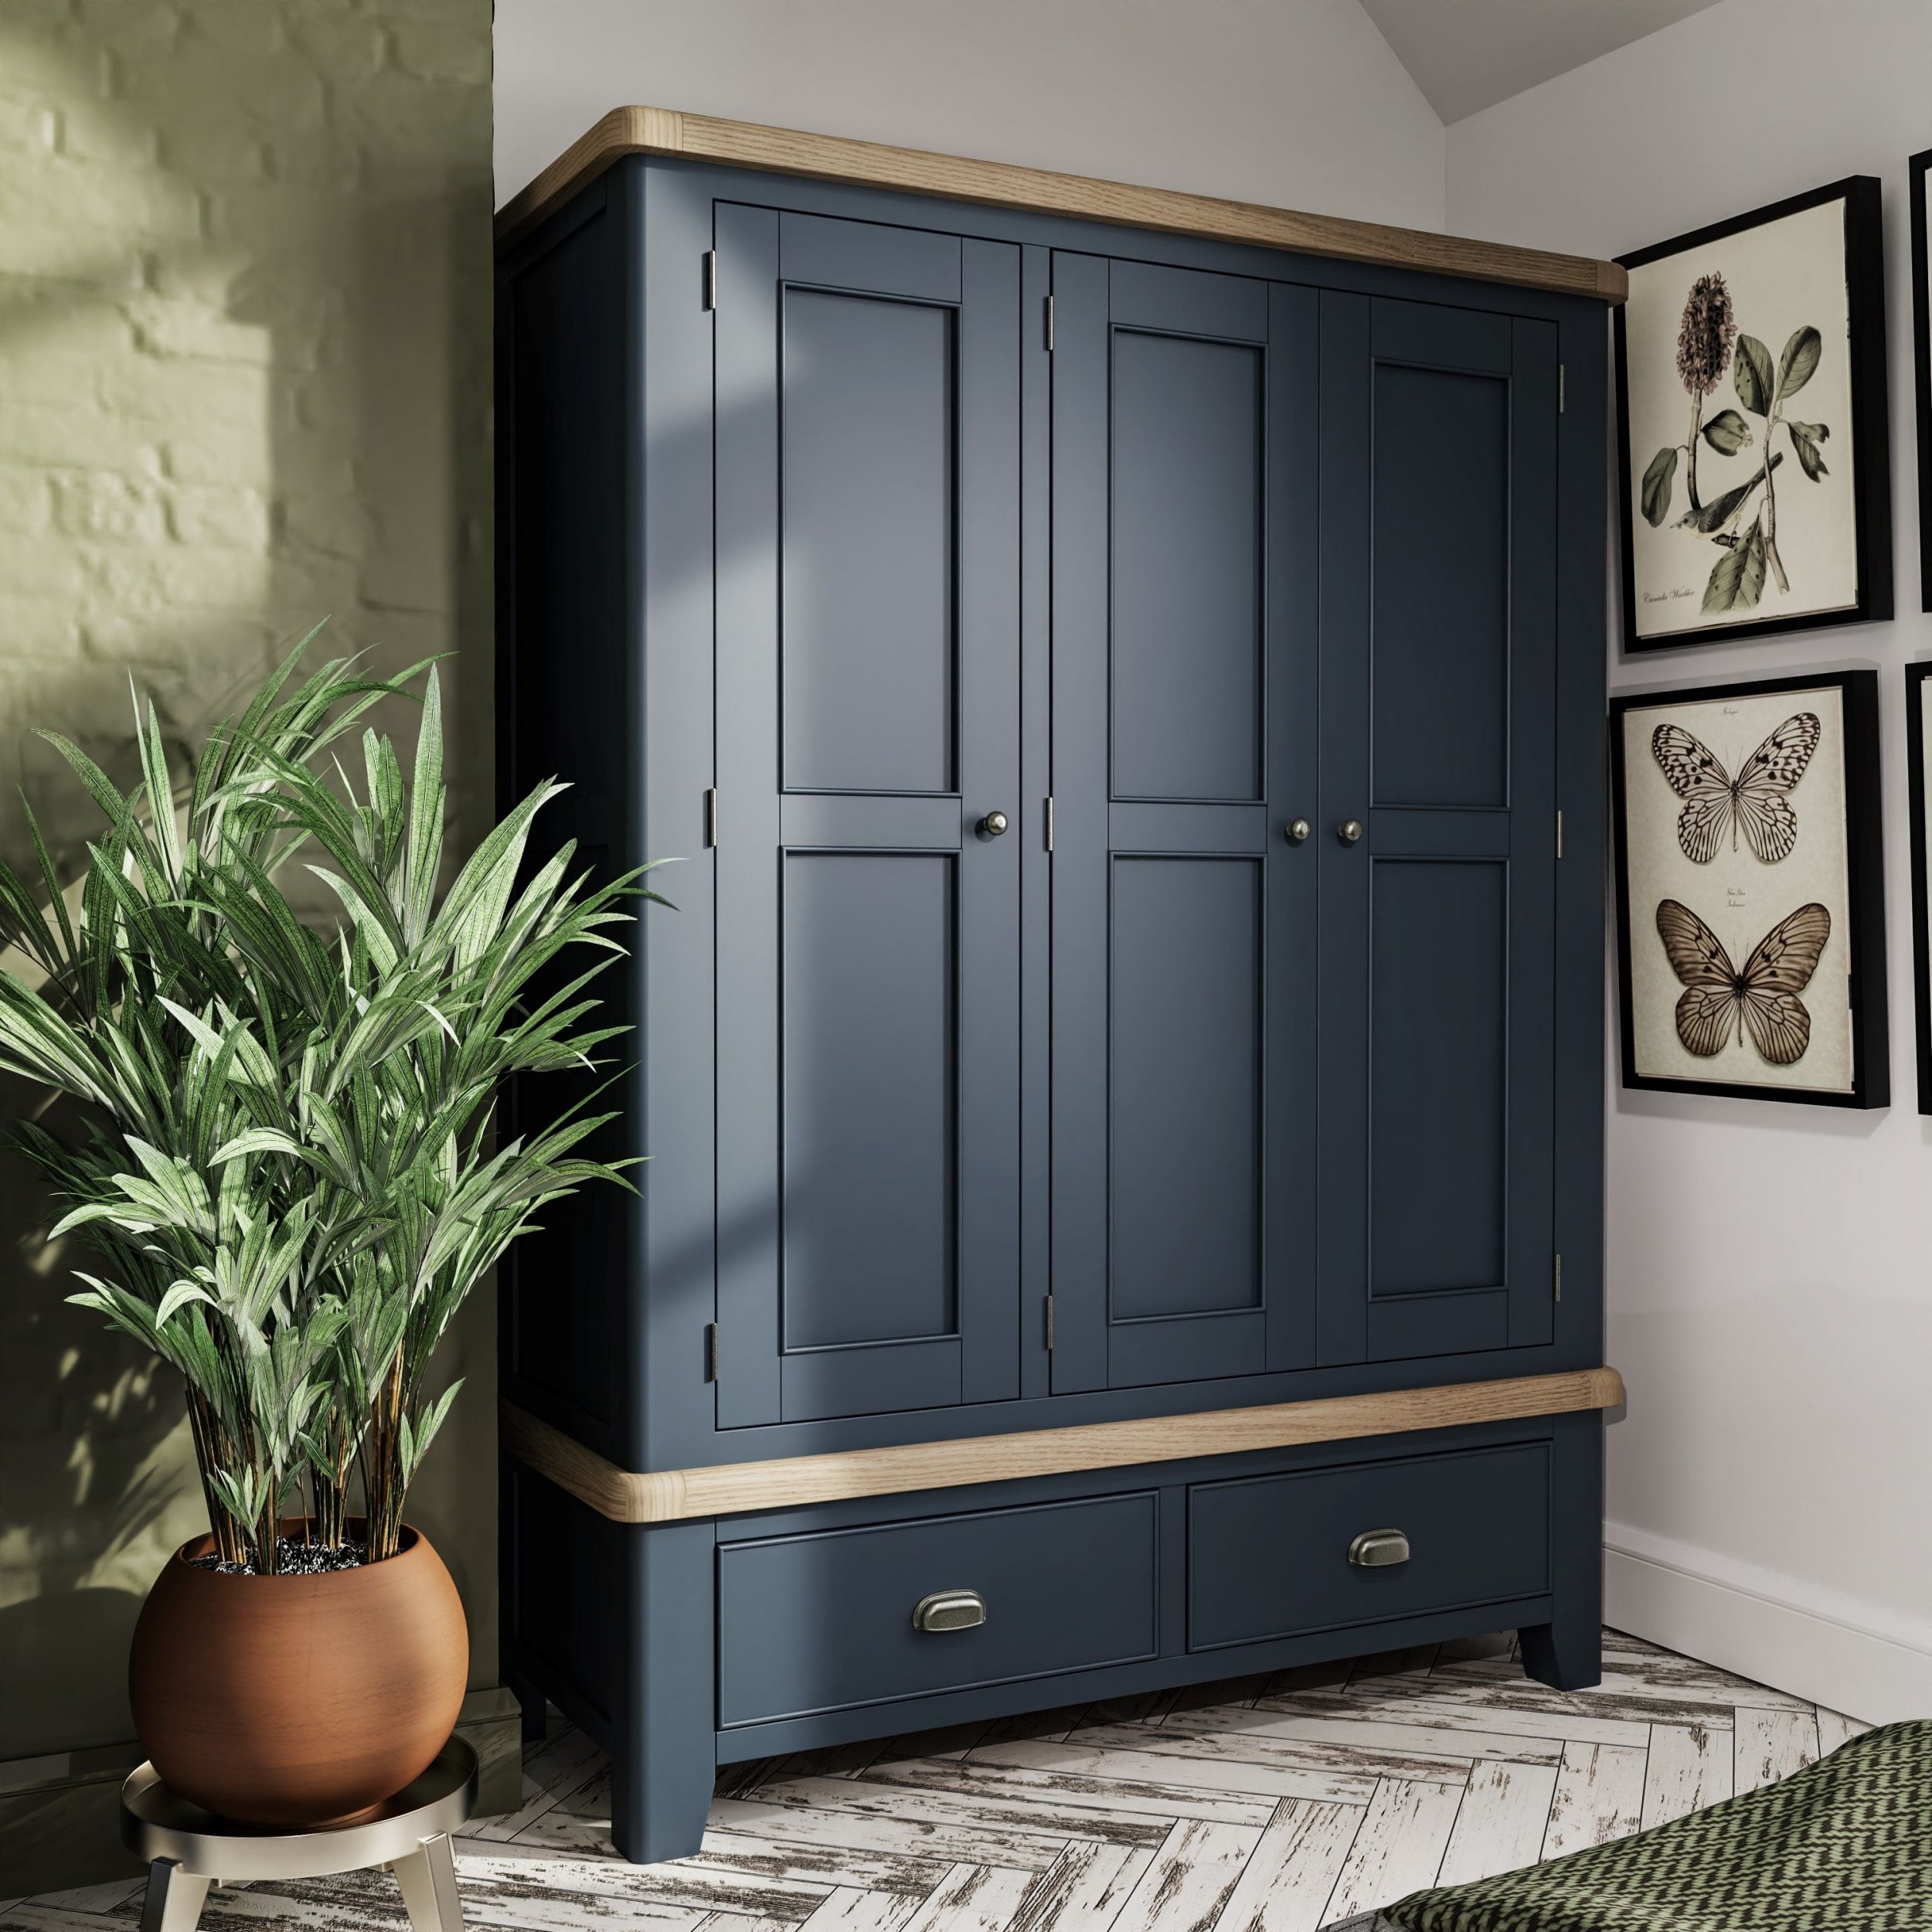 Haxby Oak Painted Bedroom 3 Door Wardrobe – Blue | The Clearance Zone With Regard To Cheap 3 Door Wardrobes (Gallery 4 of 20)